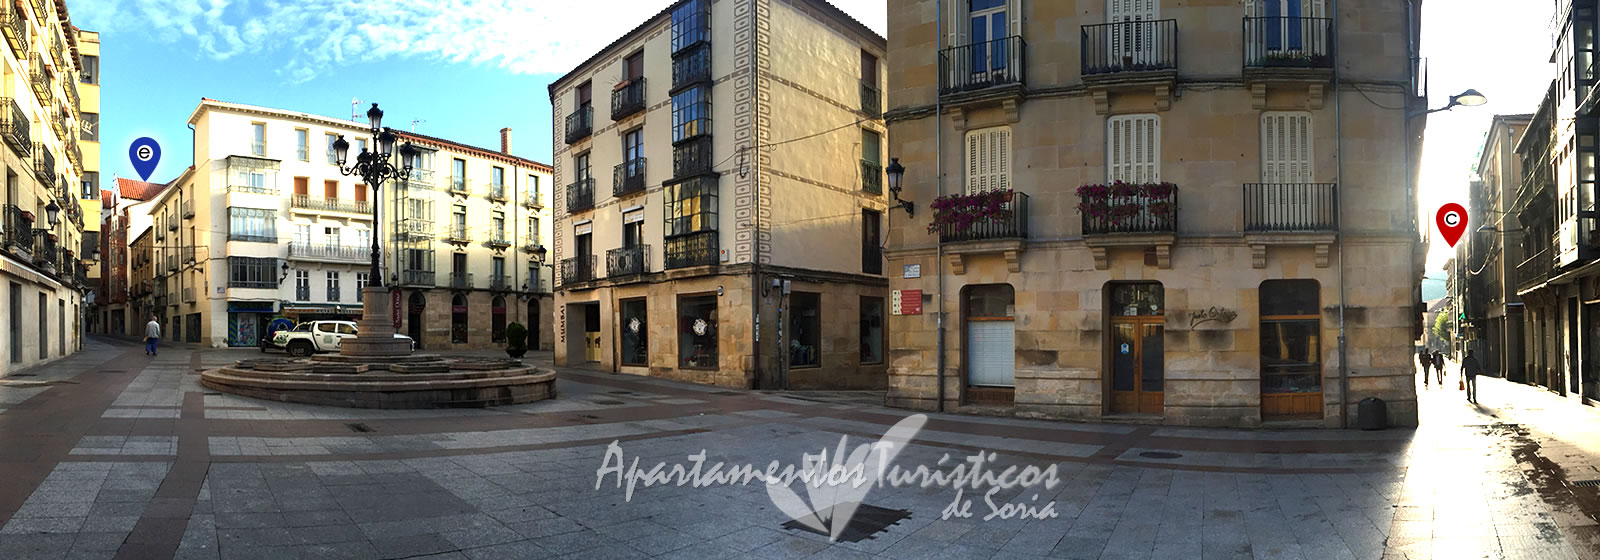 Apartamentos Turísticos de Soria